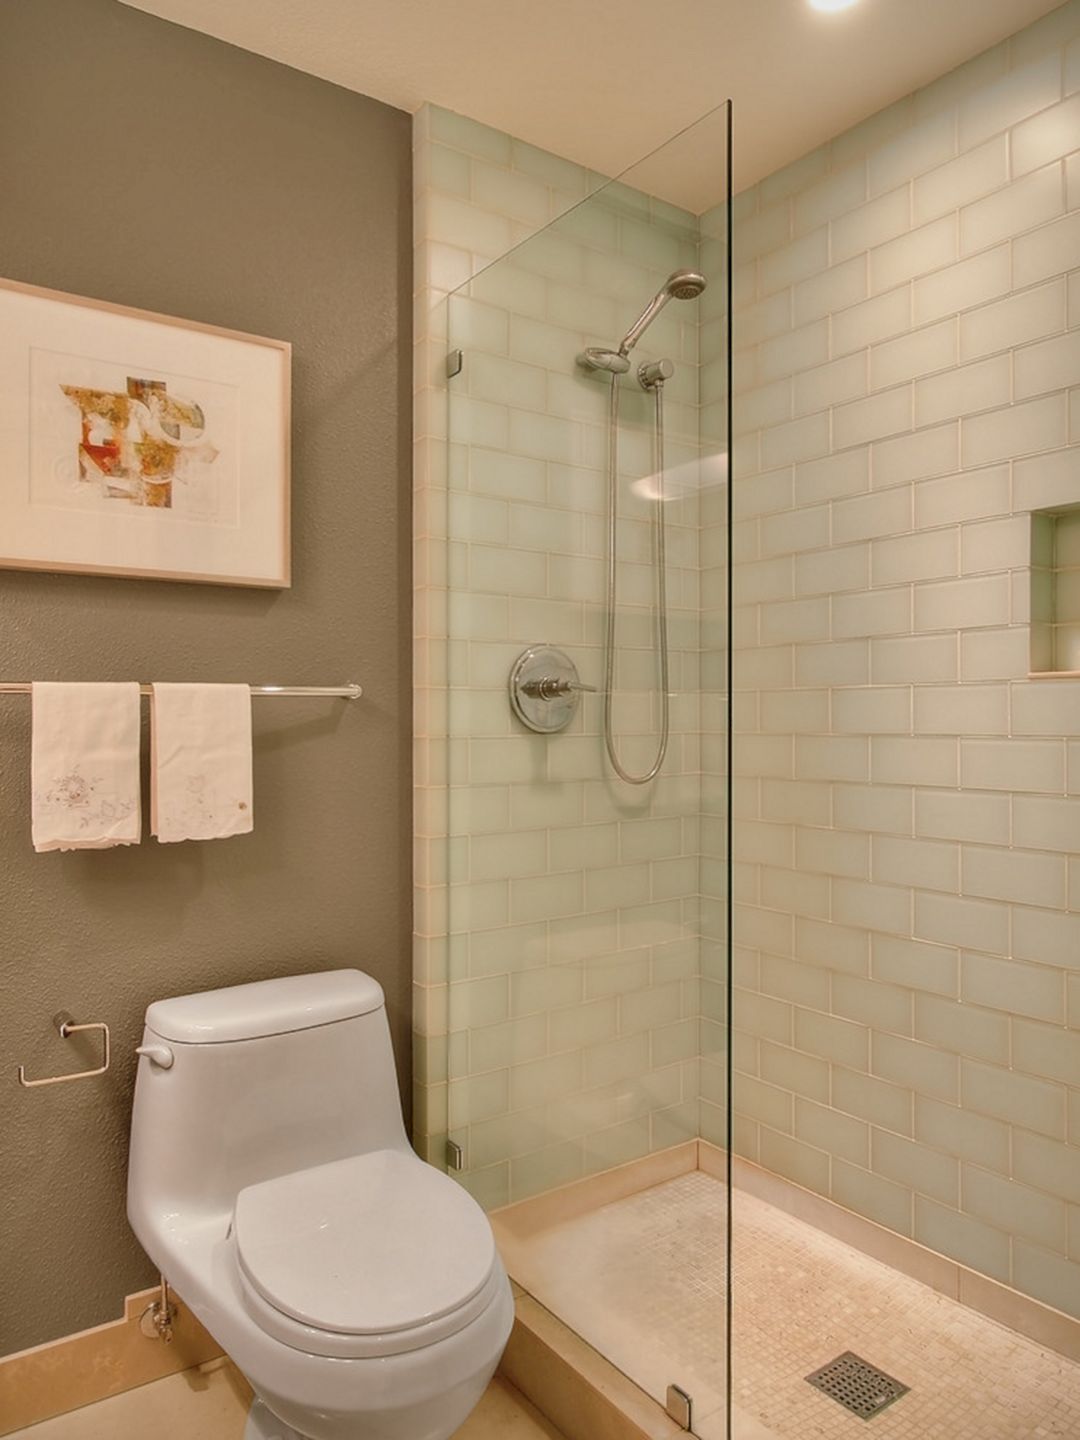  Small  Bathroom  Shower  Doorless  1 Small  Bathroom  Shower  